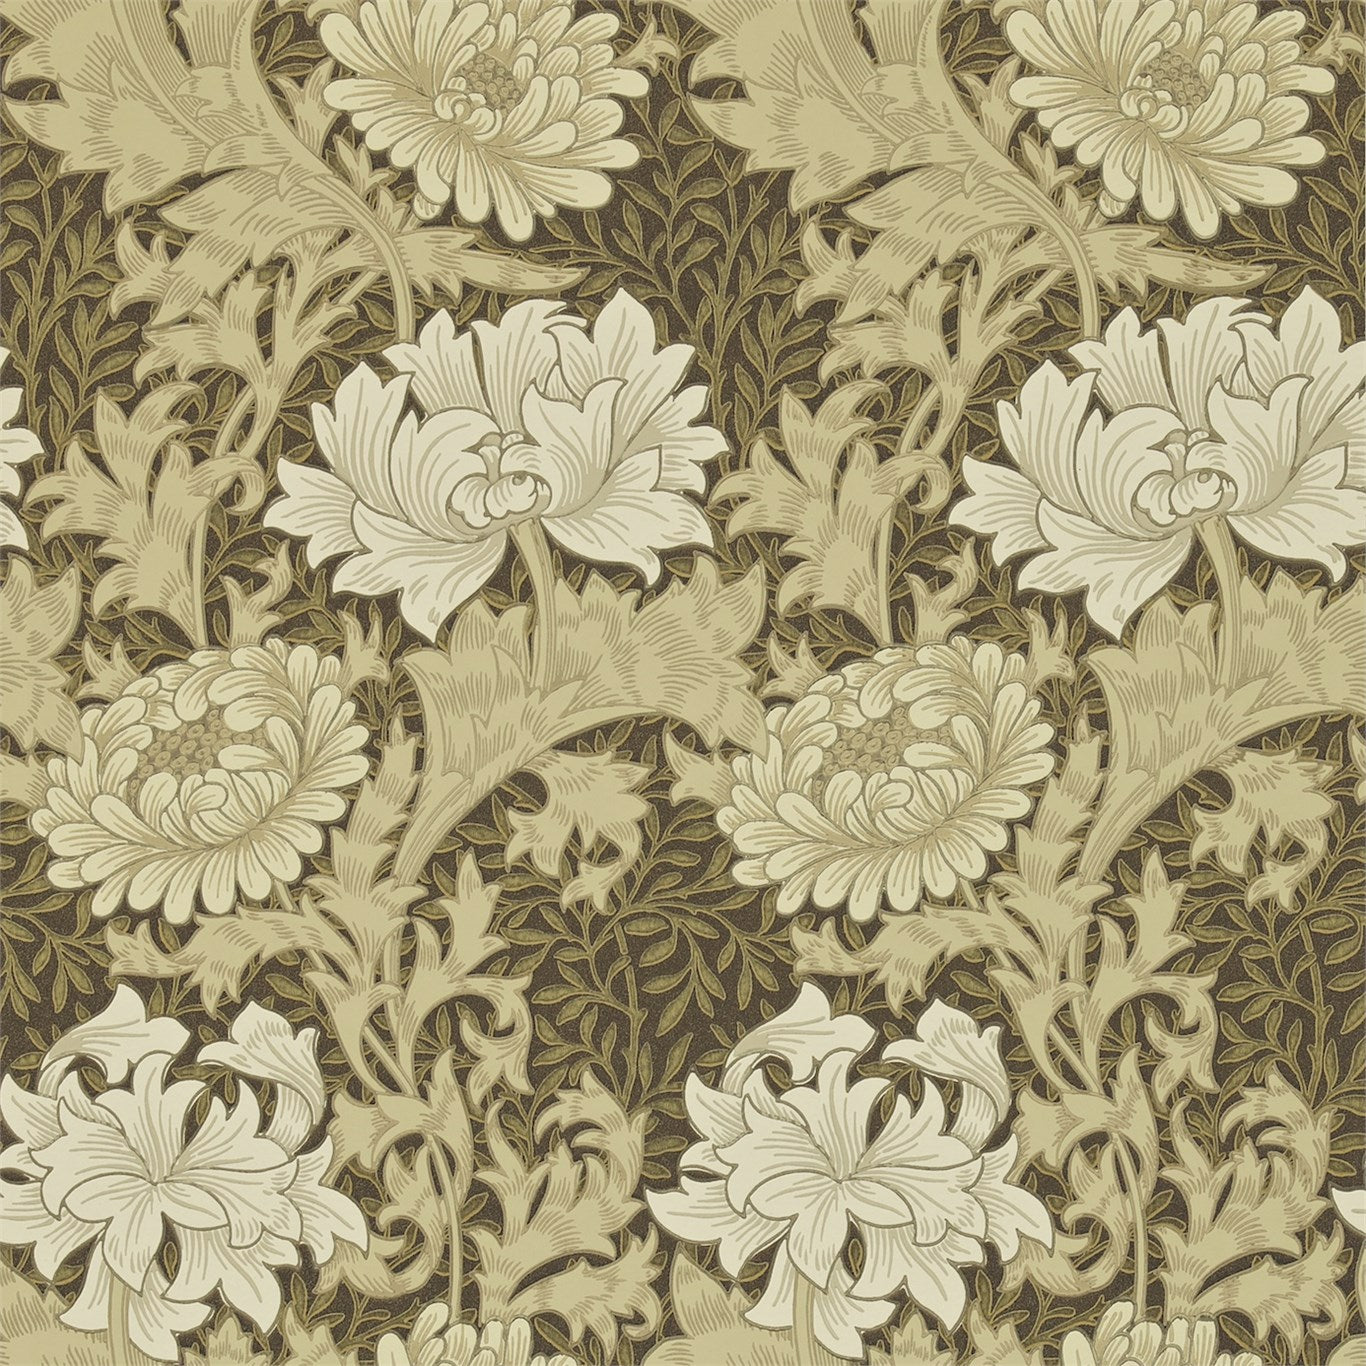 Chrysanthemum Bullrush Wallpaper DARW212547 by Morris & Co